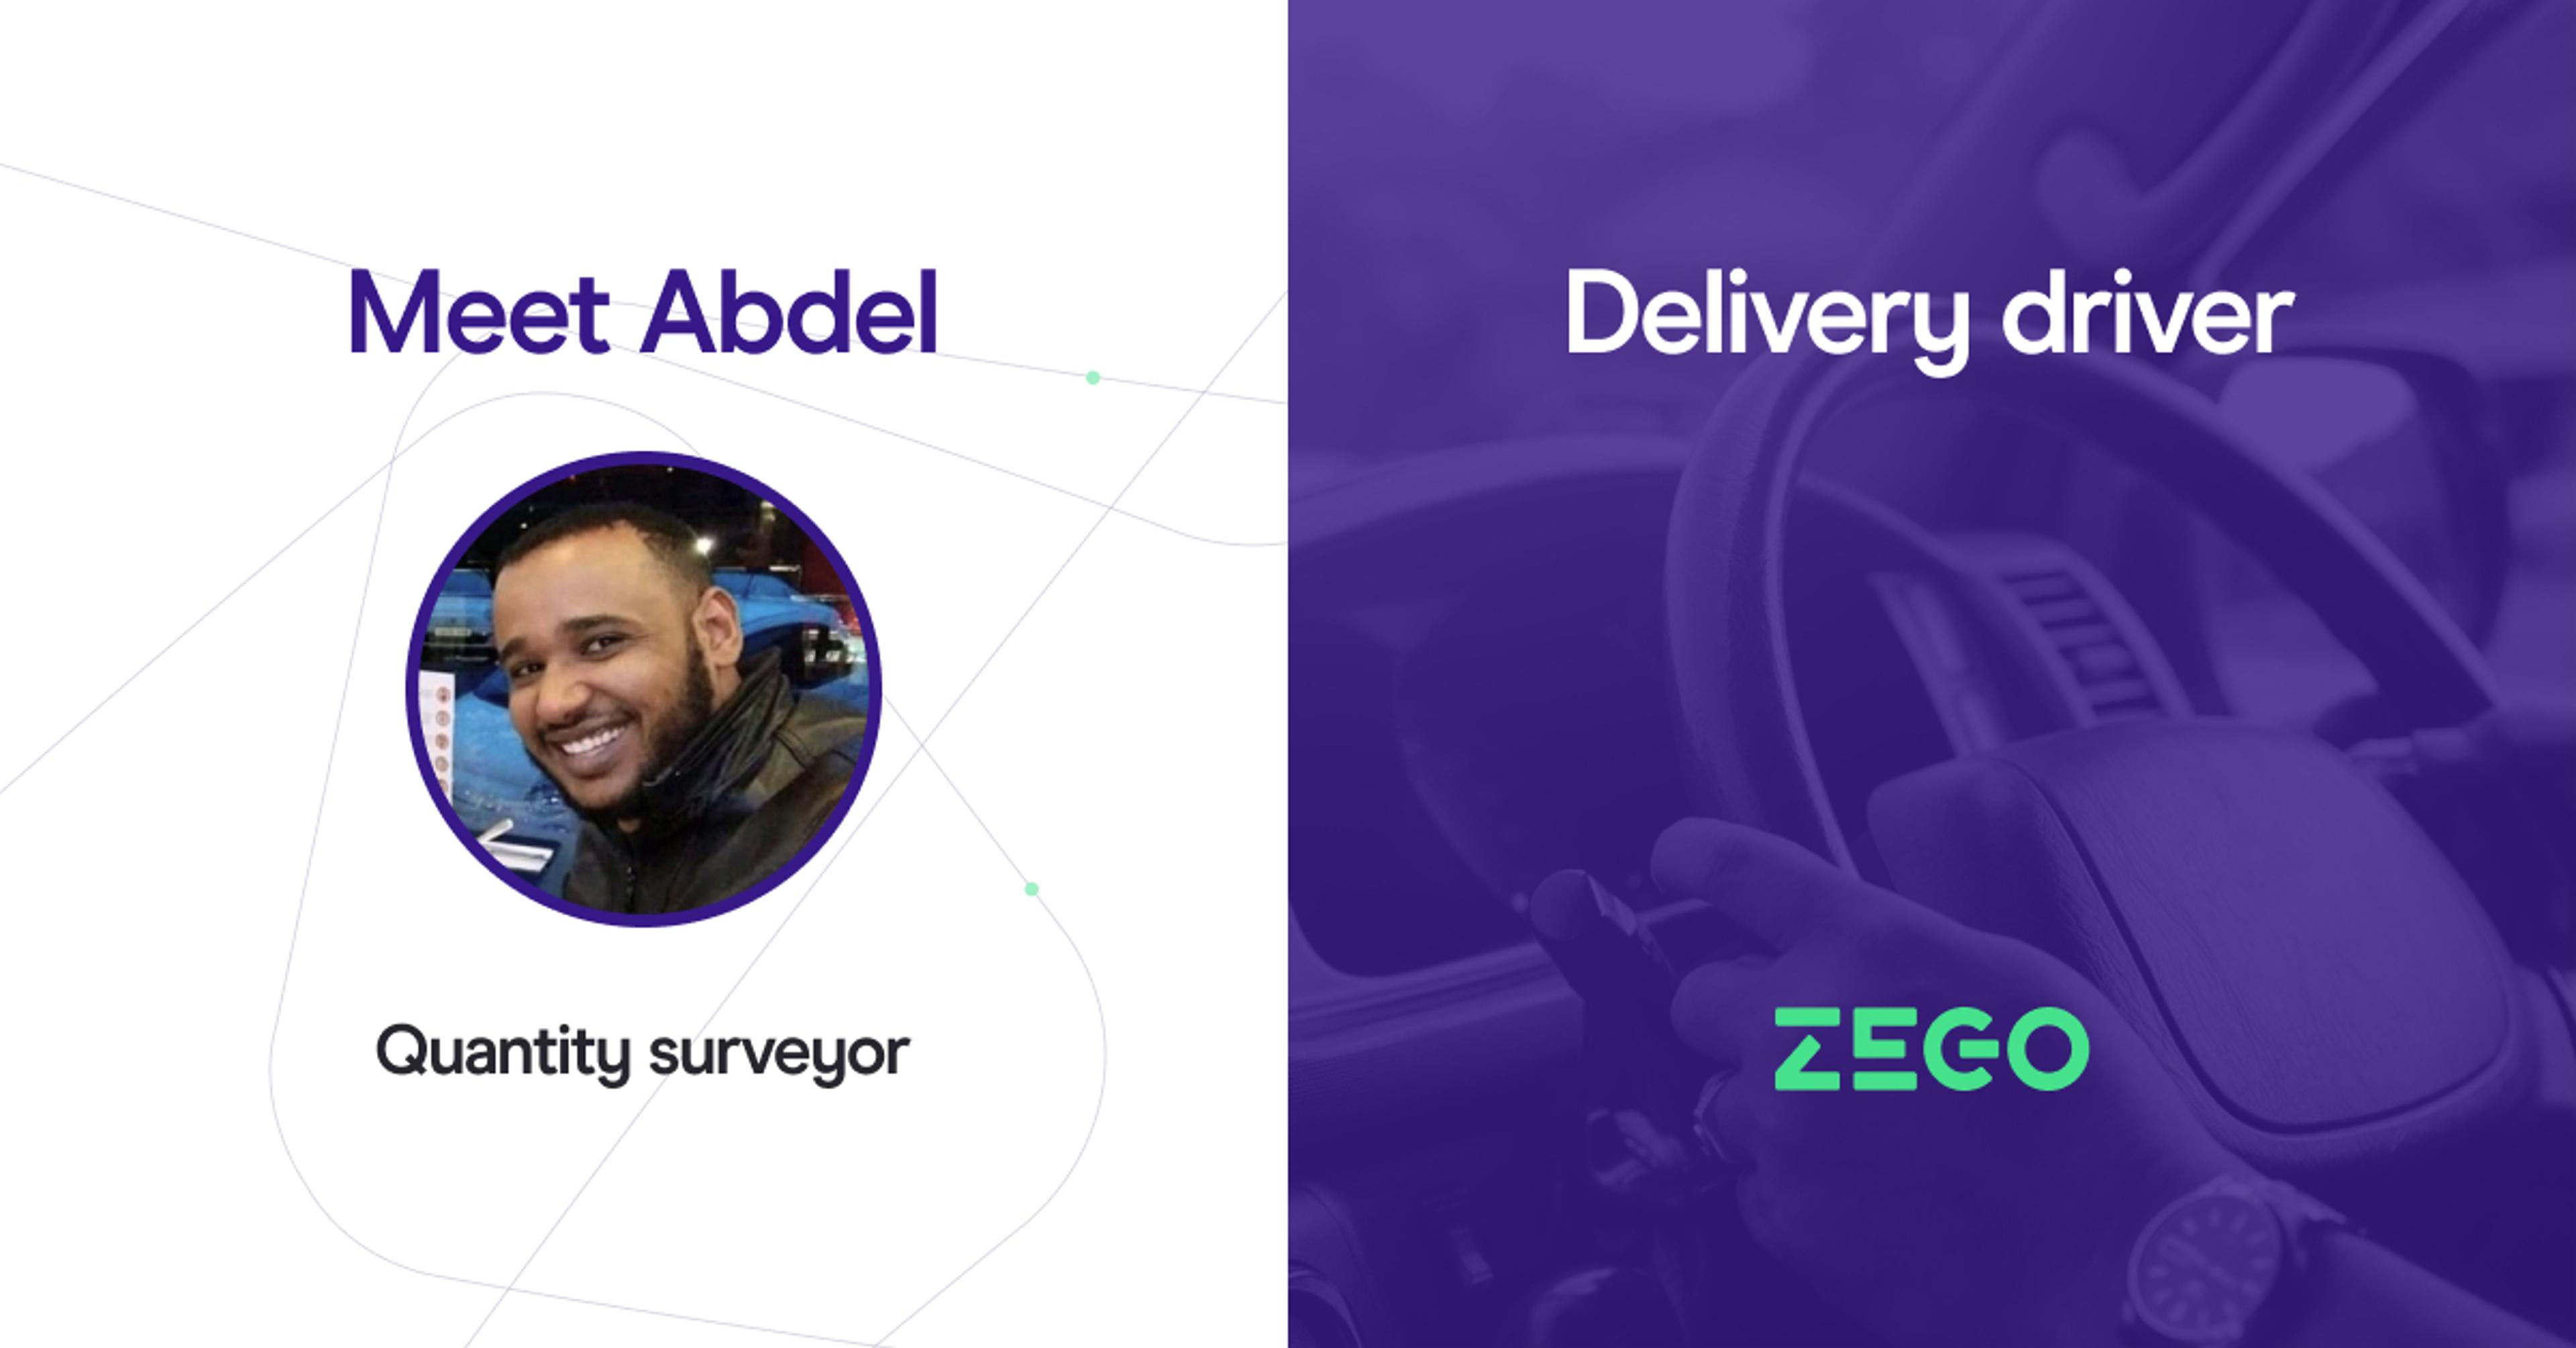 Meet Abdel: Quantity surveyor, delivery driver